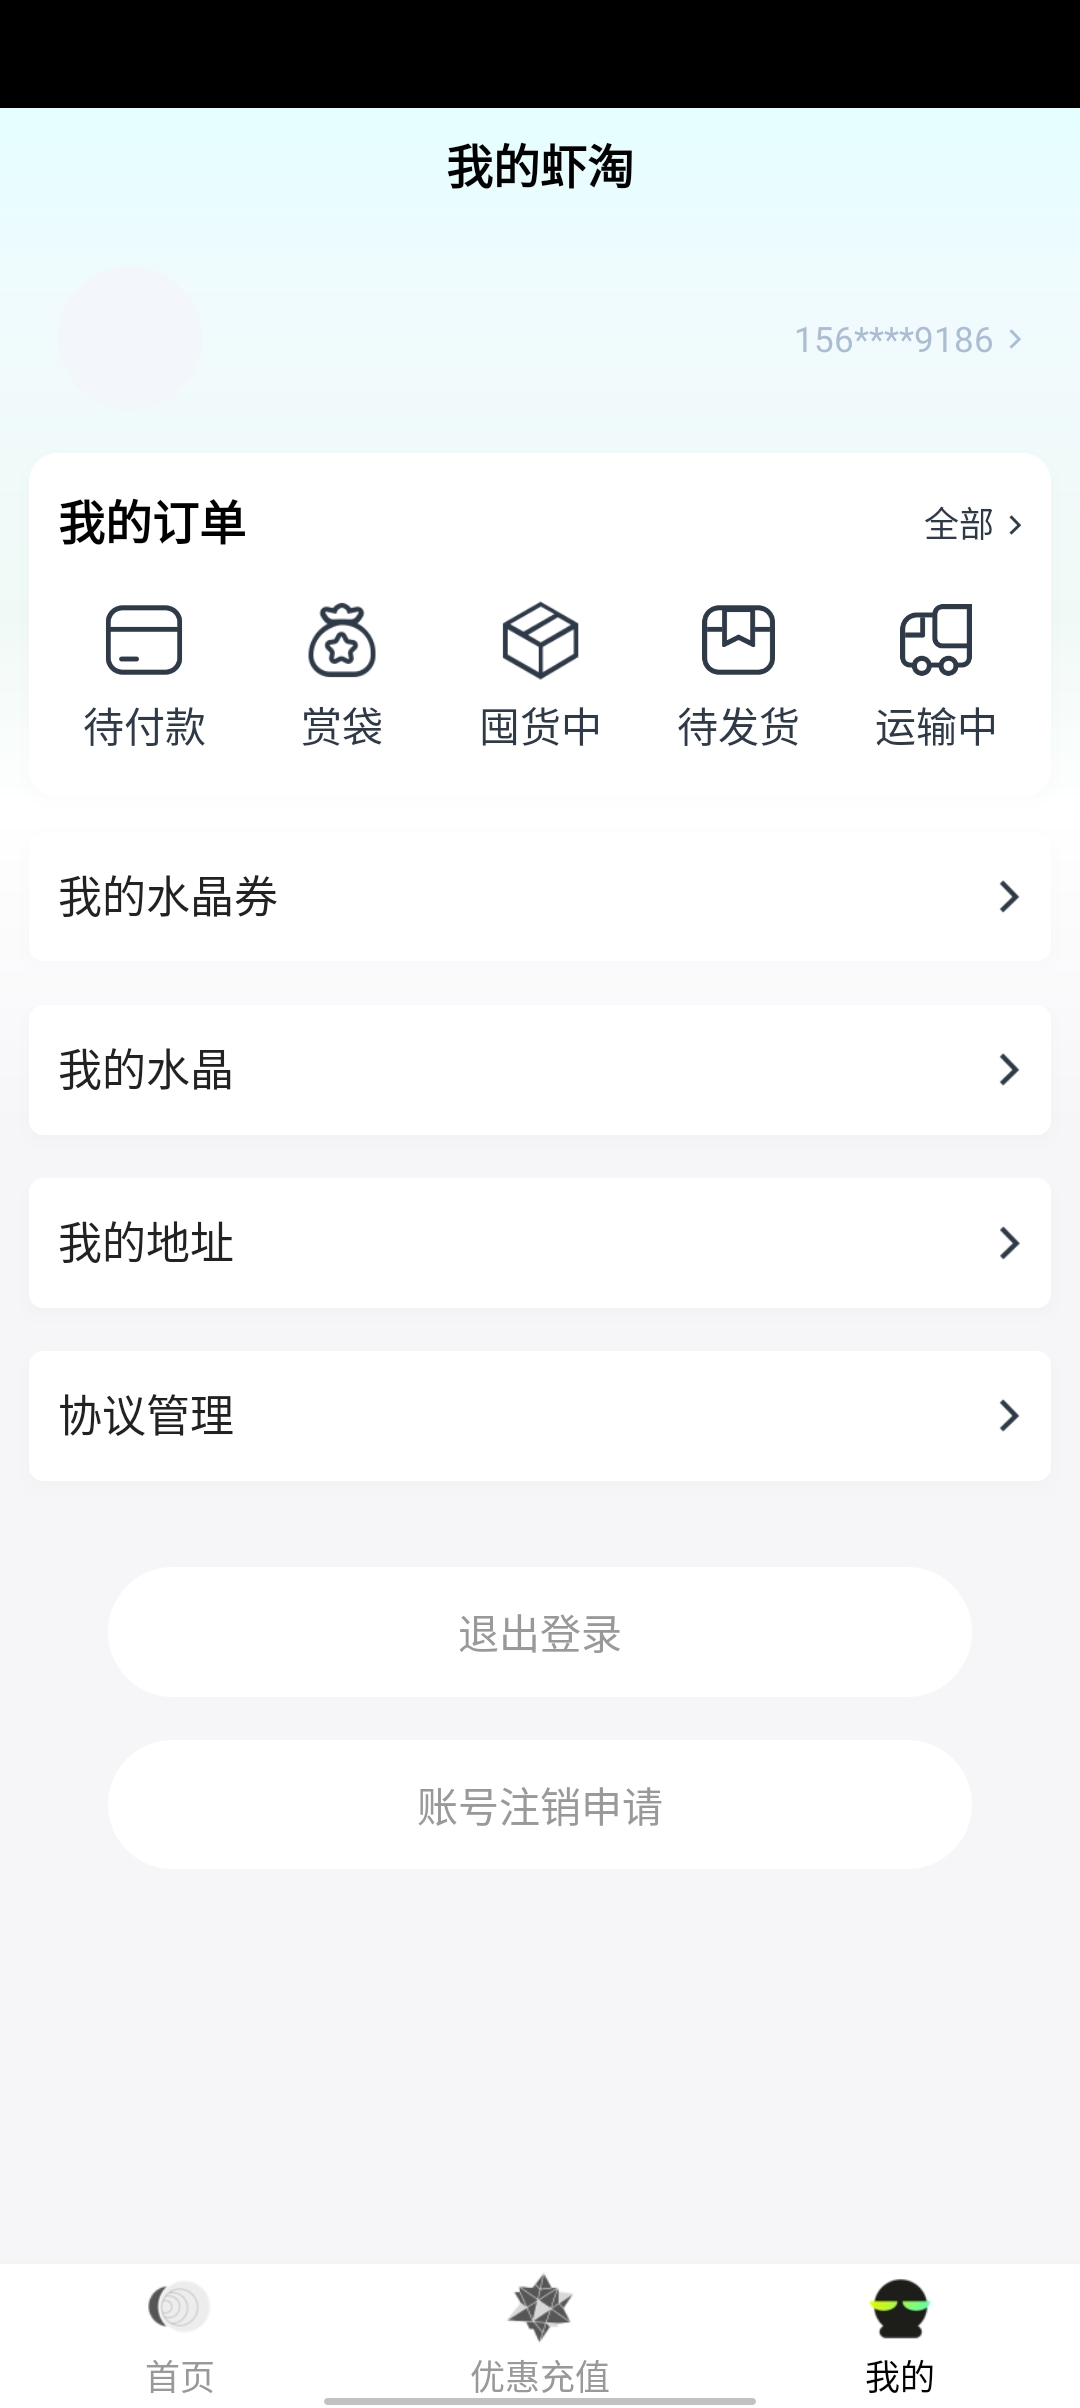 MITAKO虾淘app